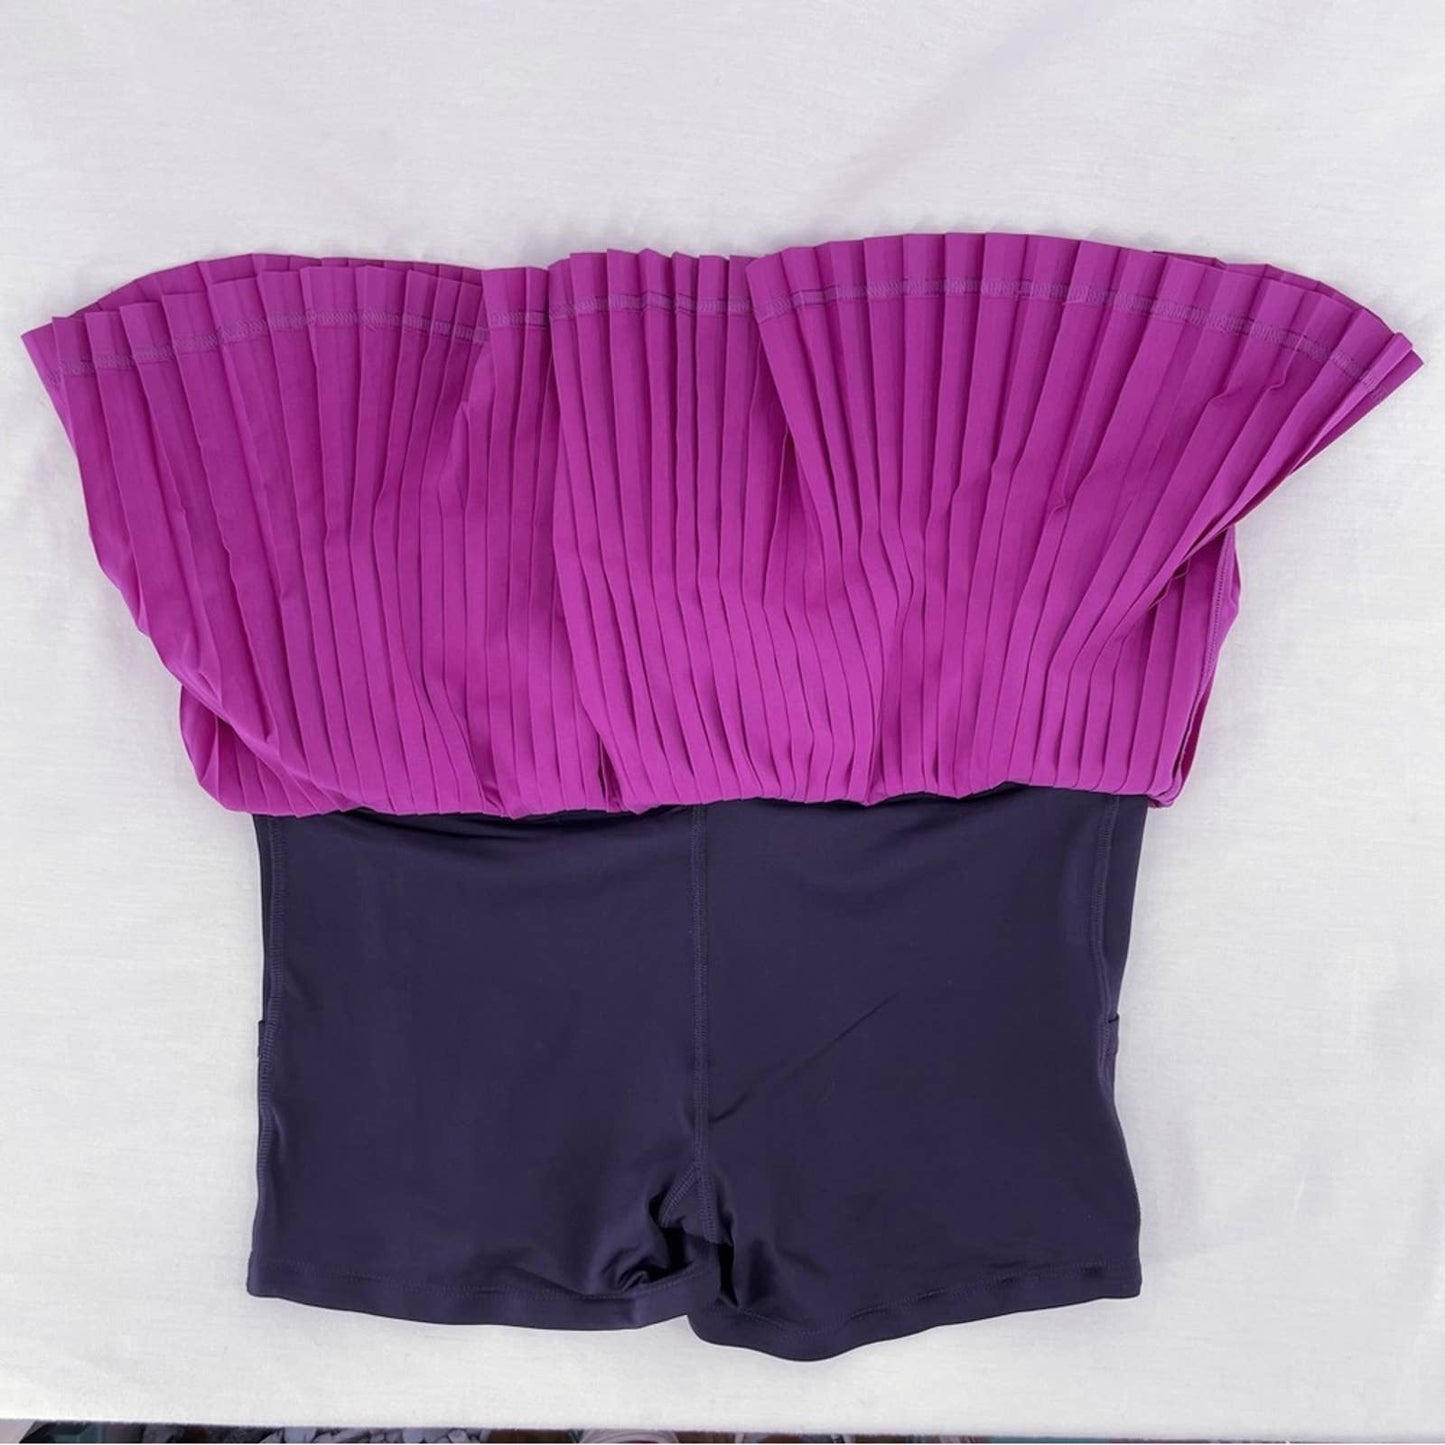 Lululemon Pleat to Street Ultra Violet Black Skirt Purple Running Tennis Skort Size 6